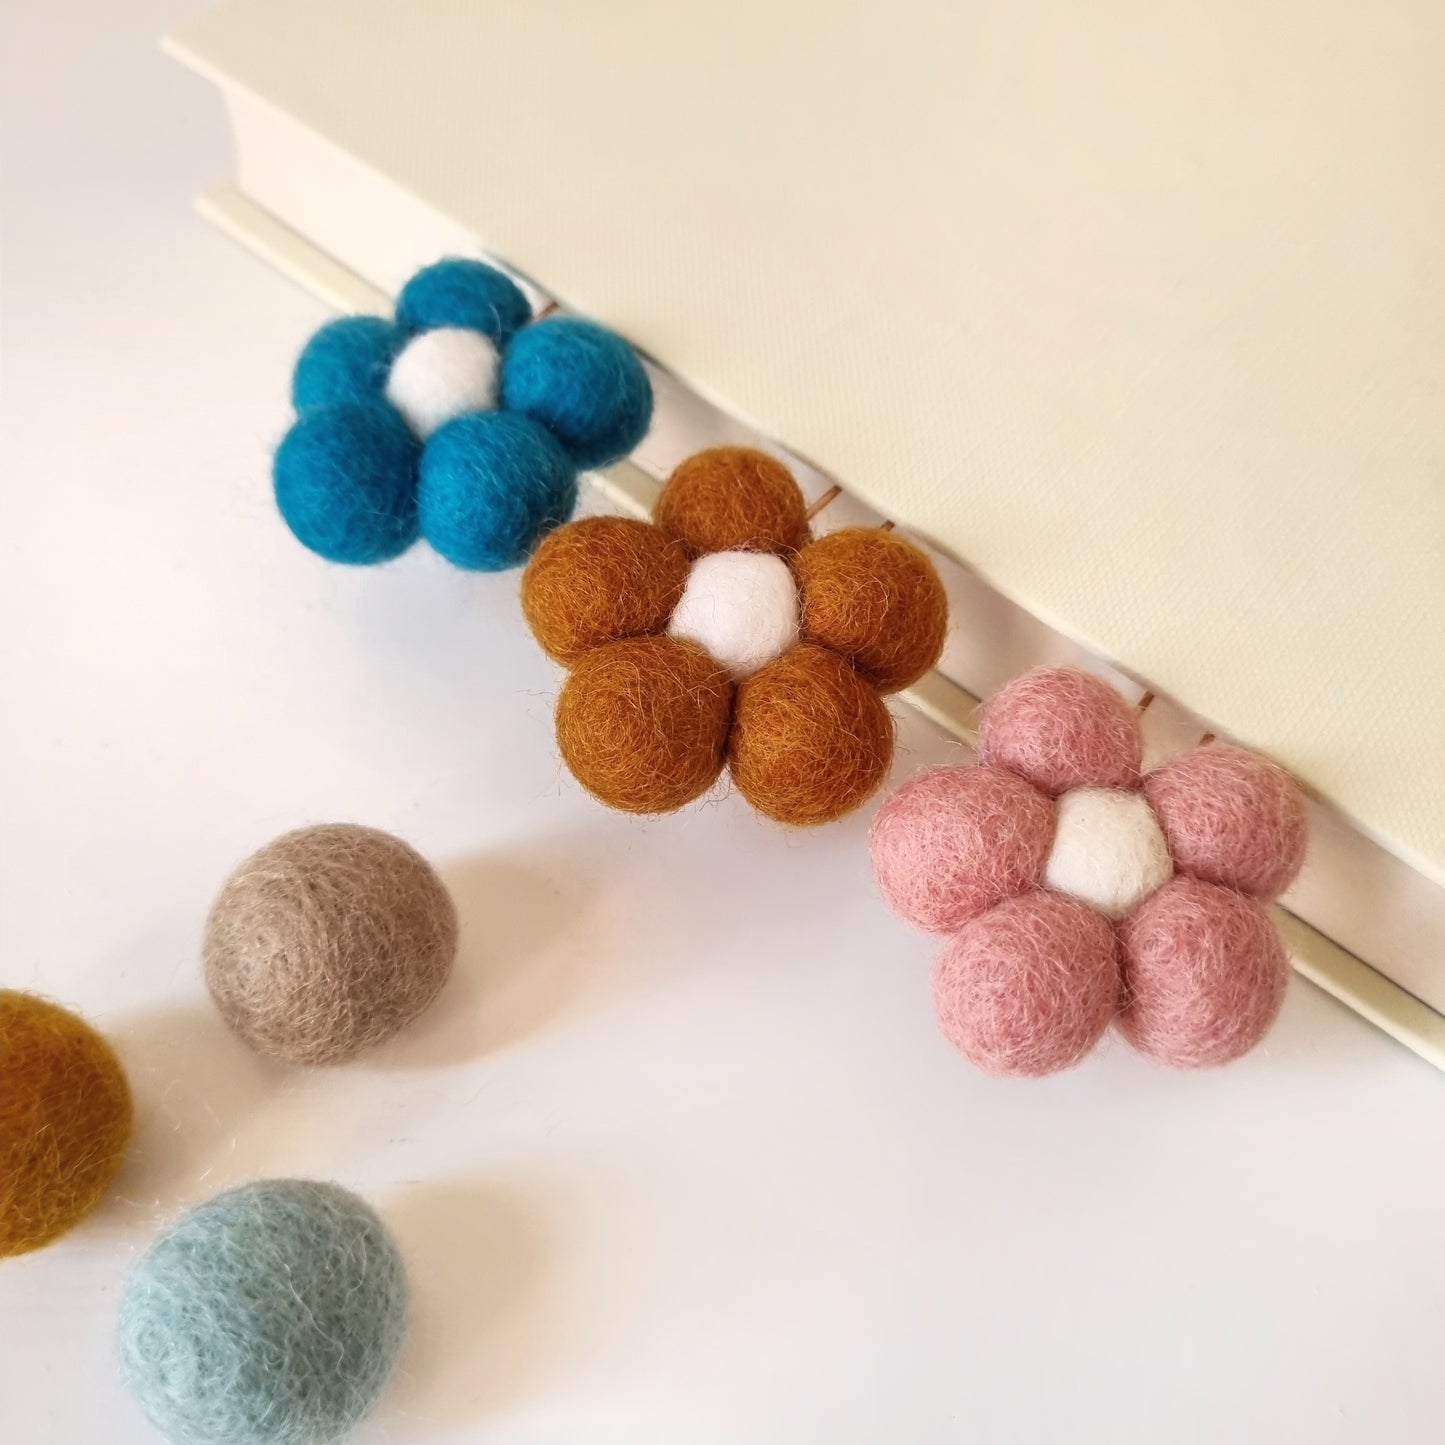 Flower Pom Pom Paperclips - Felt Ball Stationary Bookmarks